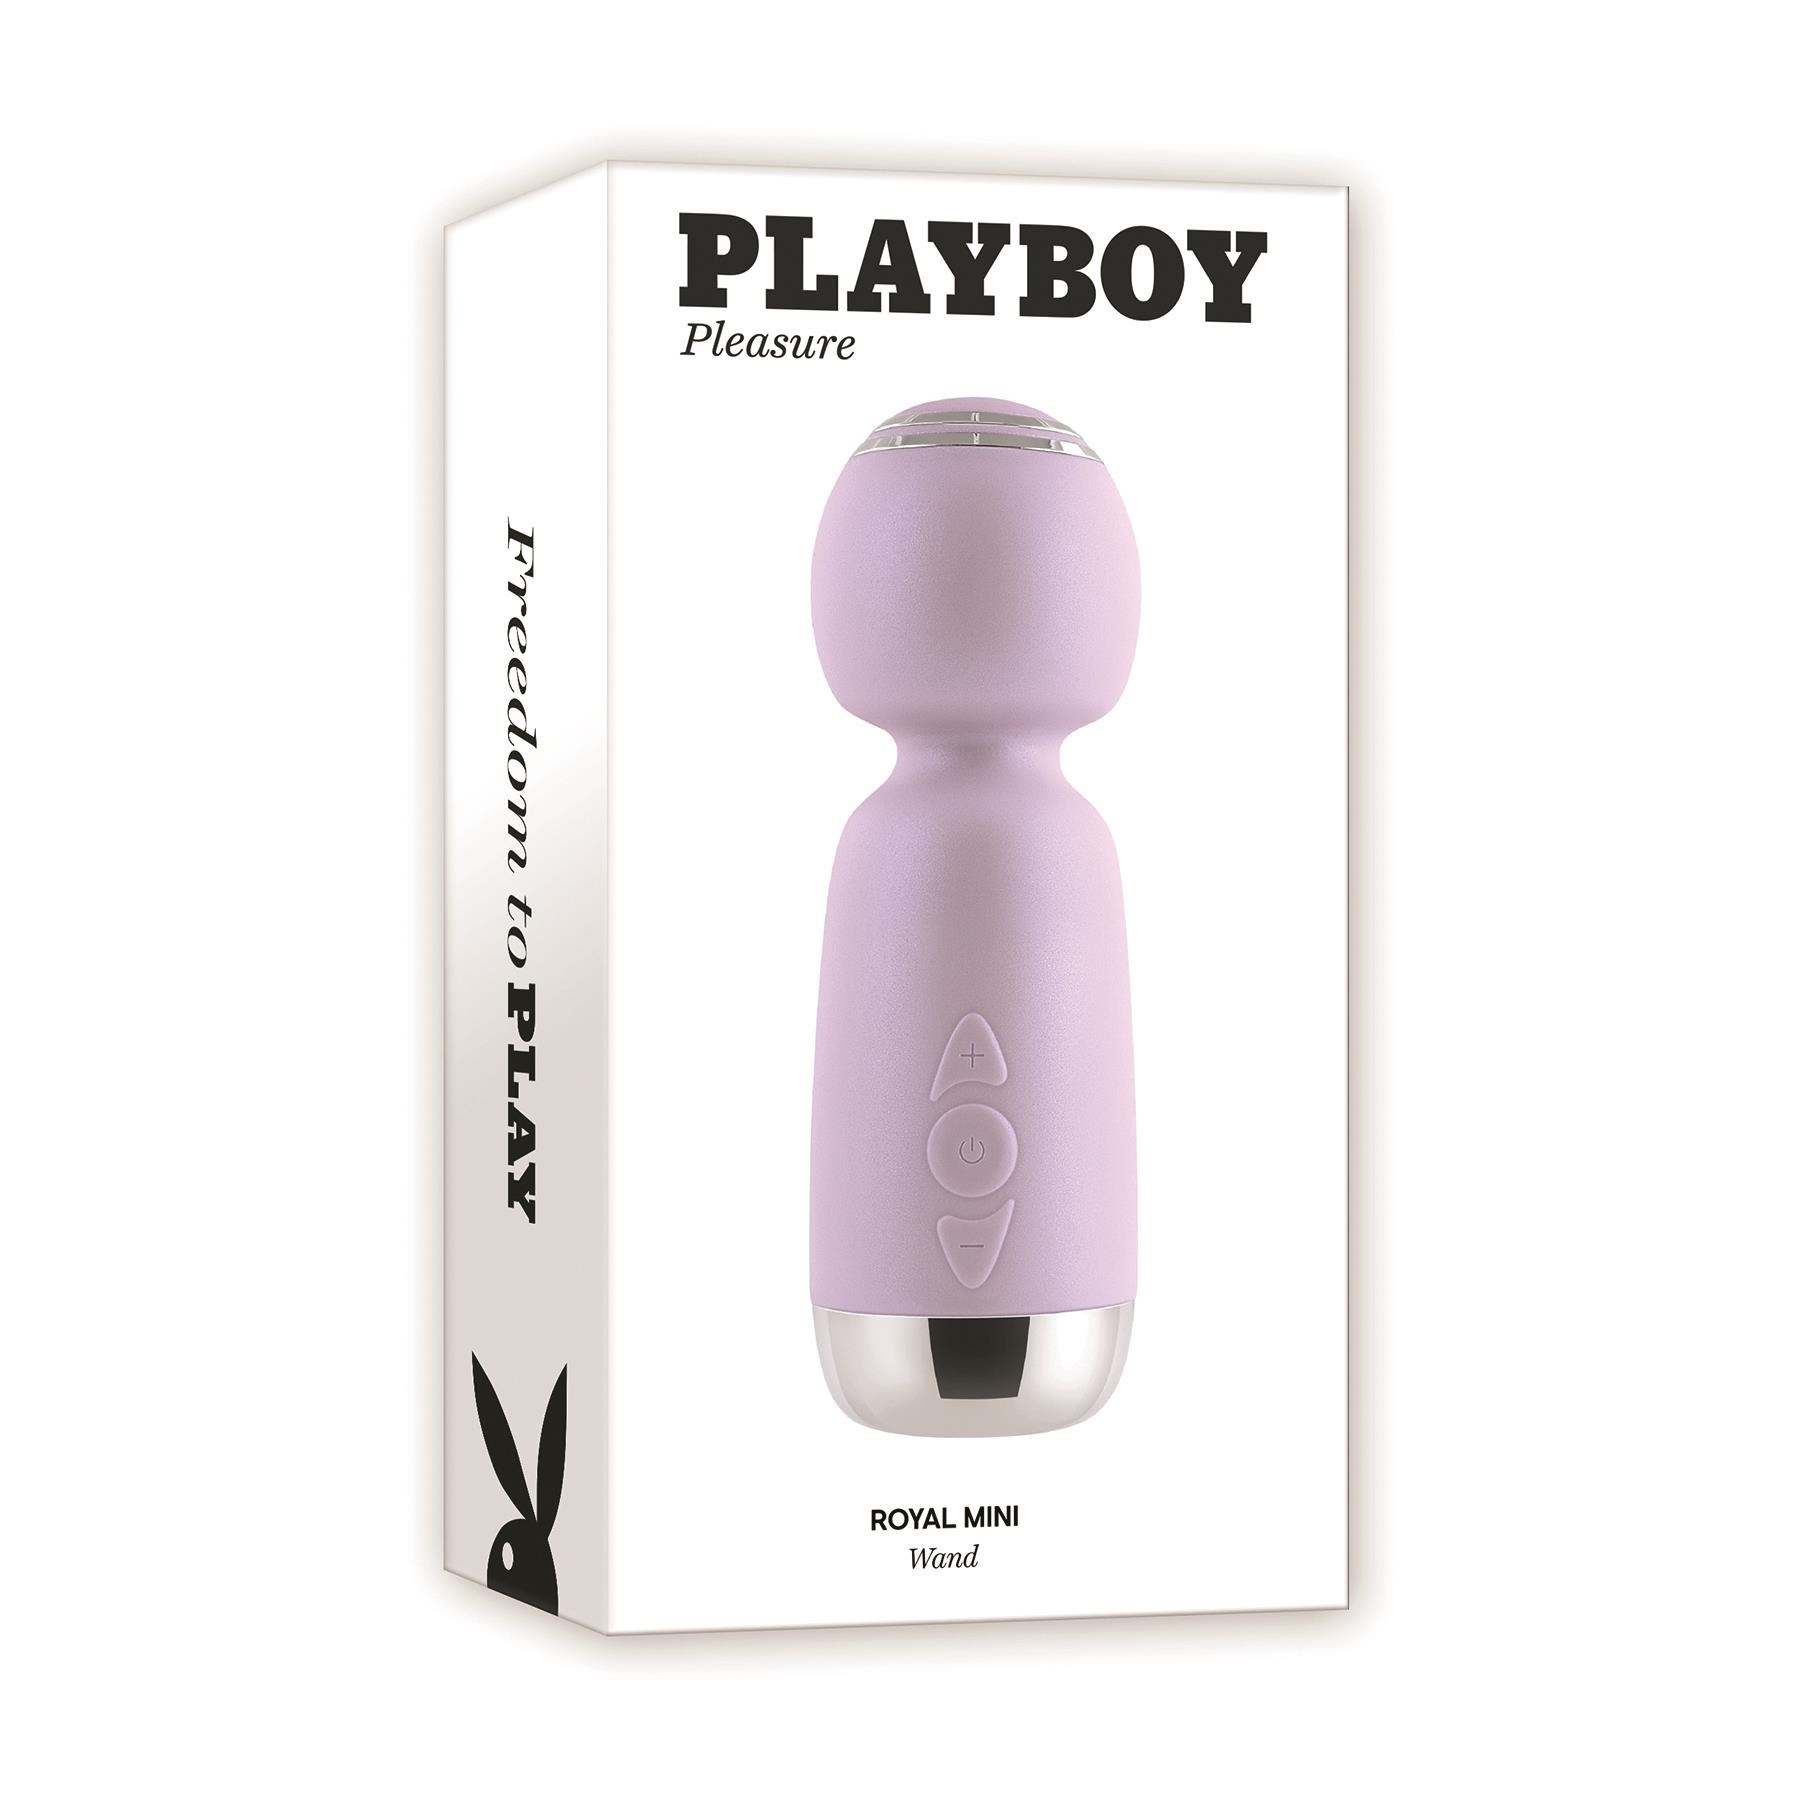 Playboy Pleasure Royal Mini Wand Massager - Packaging